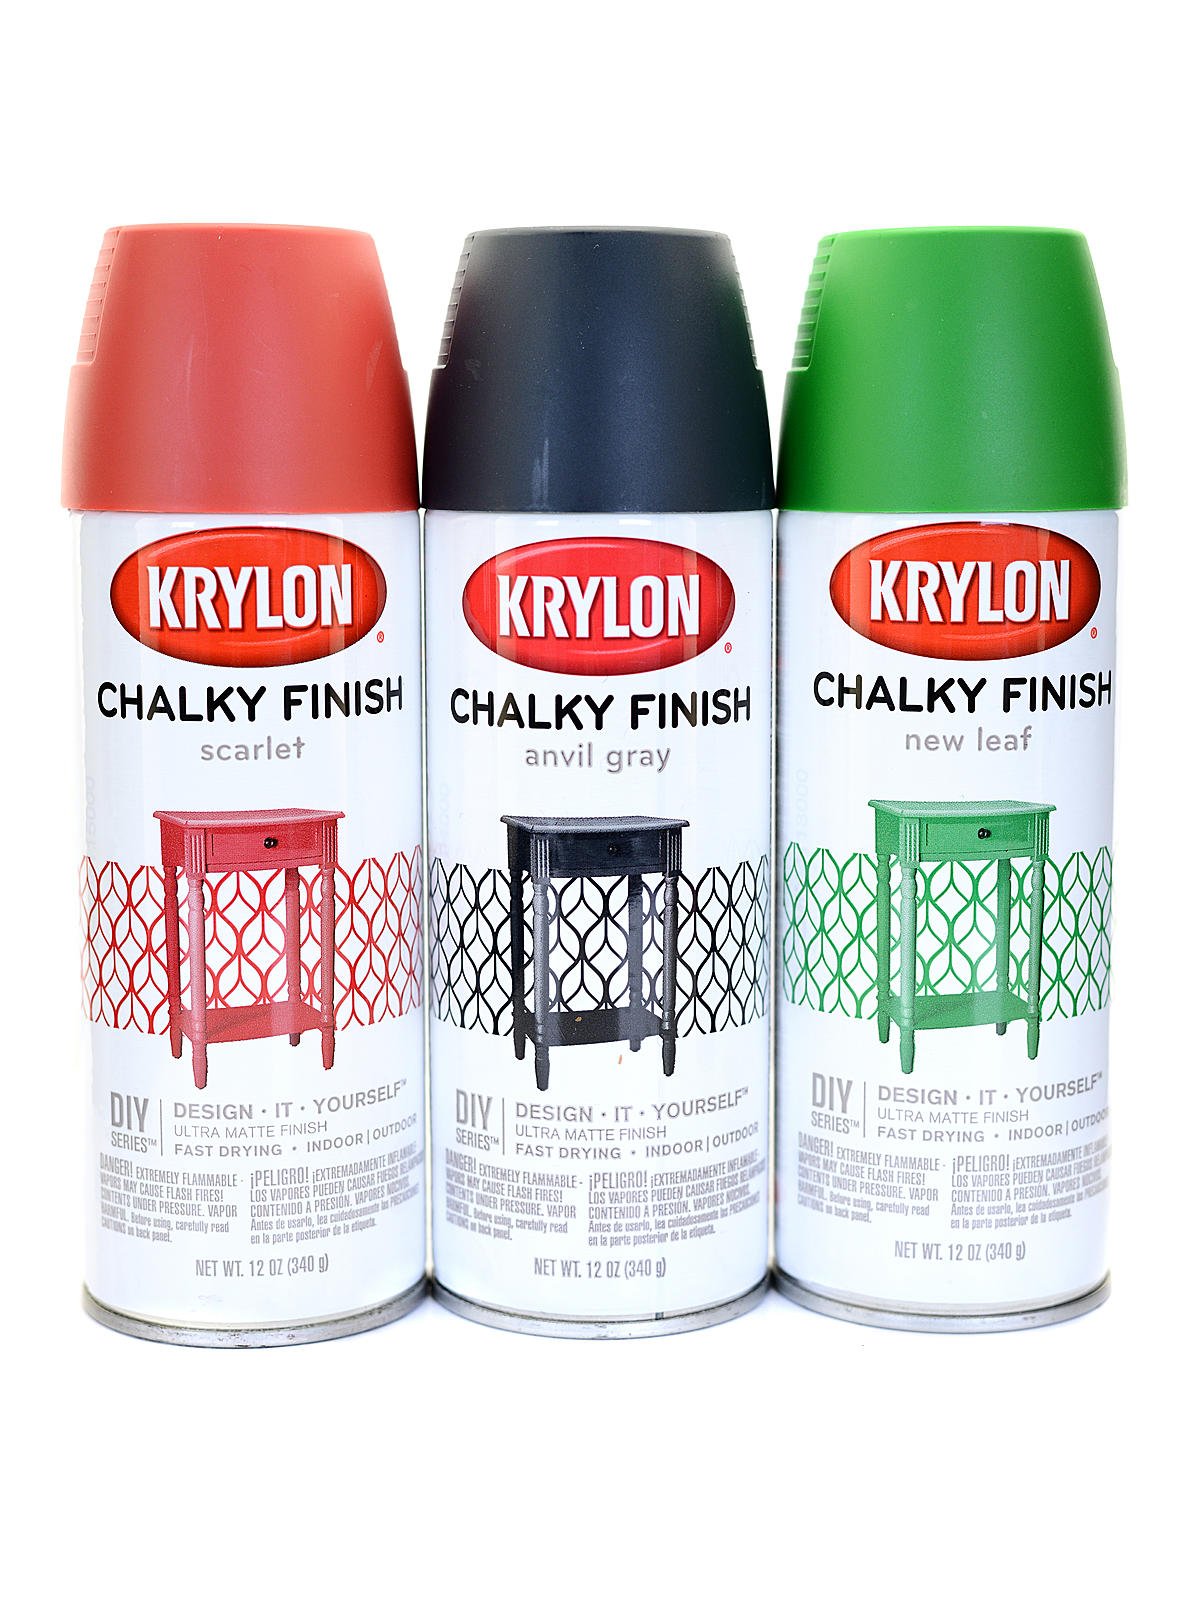 Krylon - Chalky Finish Paint